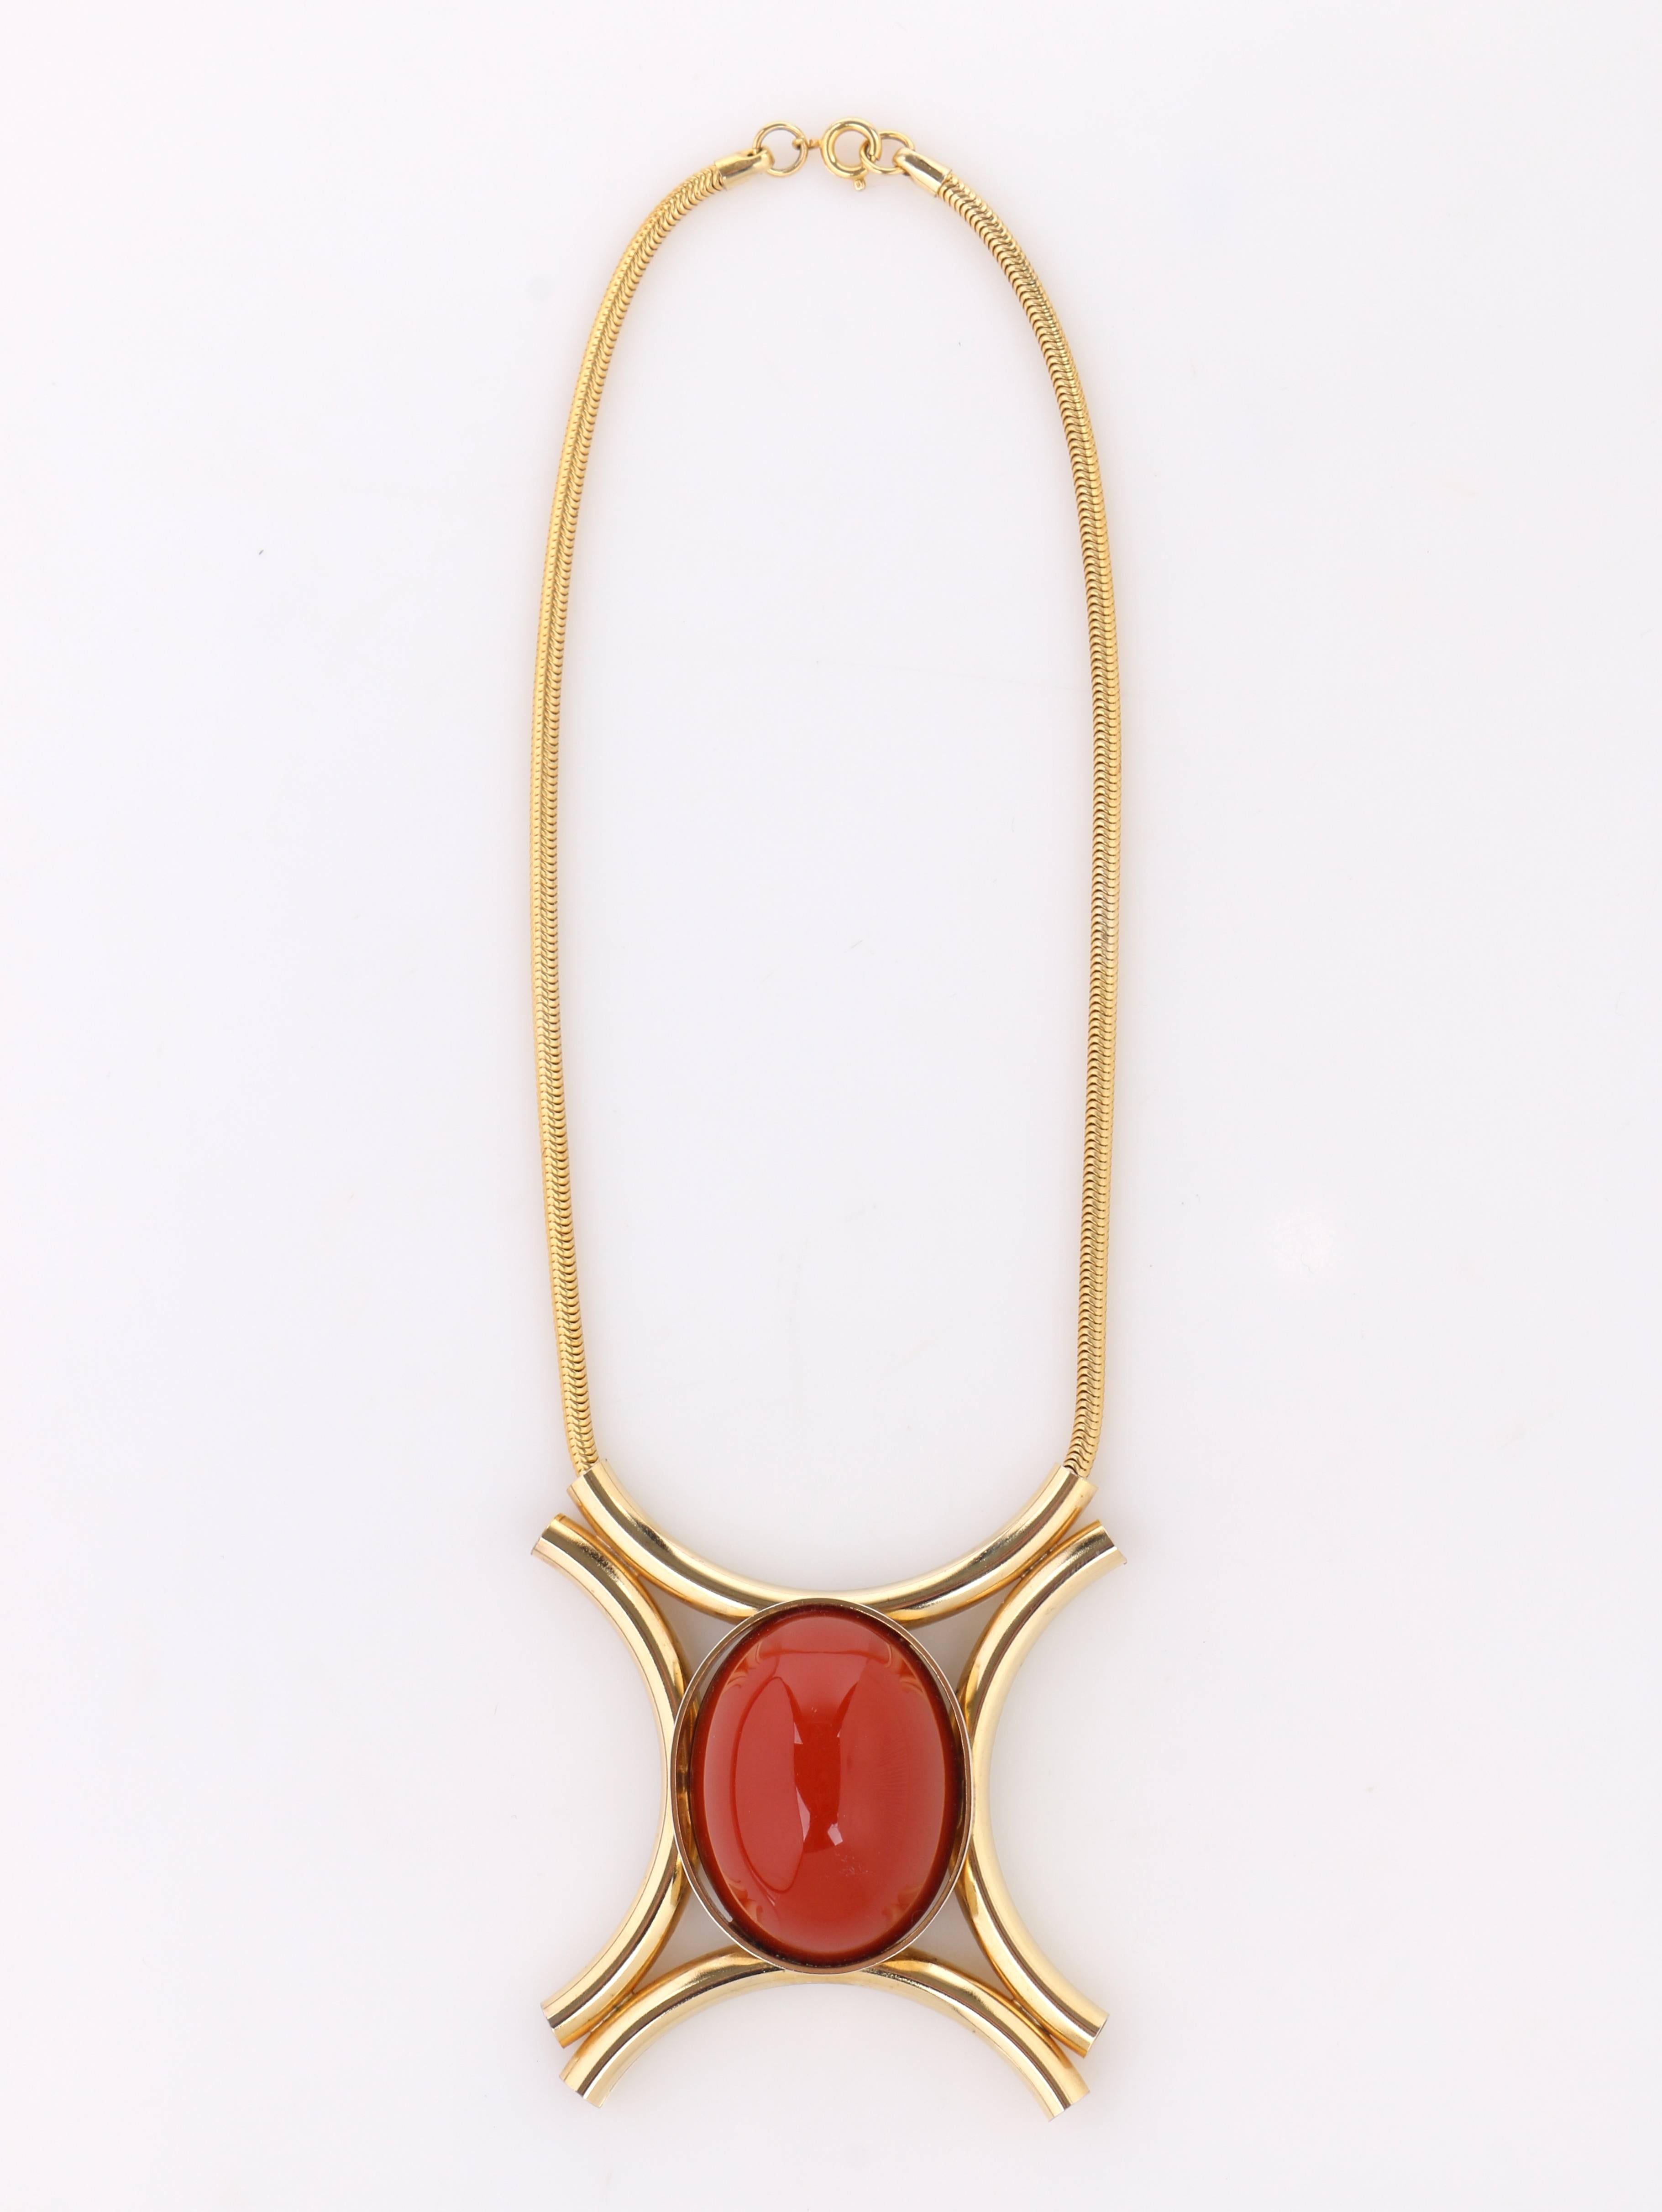 Vintage Juliana D&E, Delizza & Elser, c.1970's modernist pendant necklace. Featured on page 61 of 